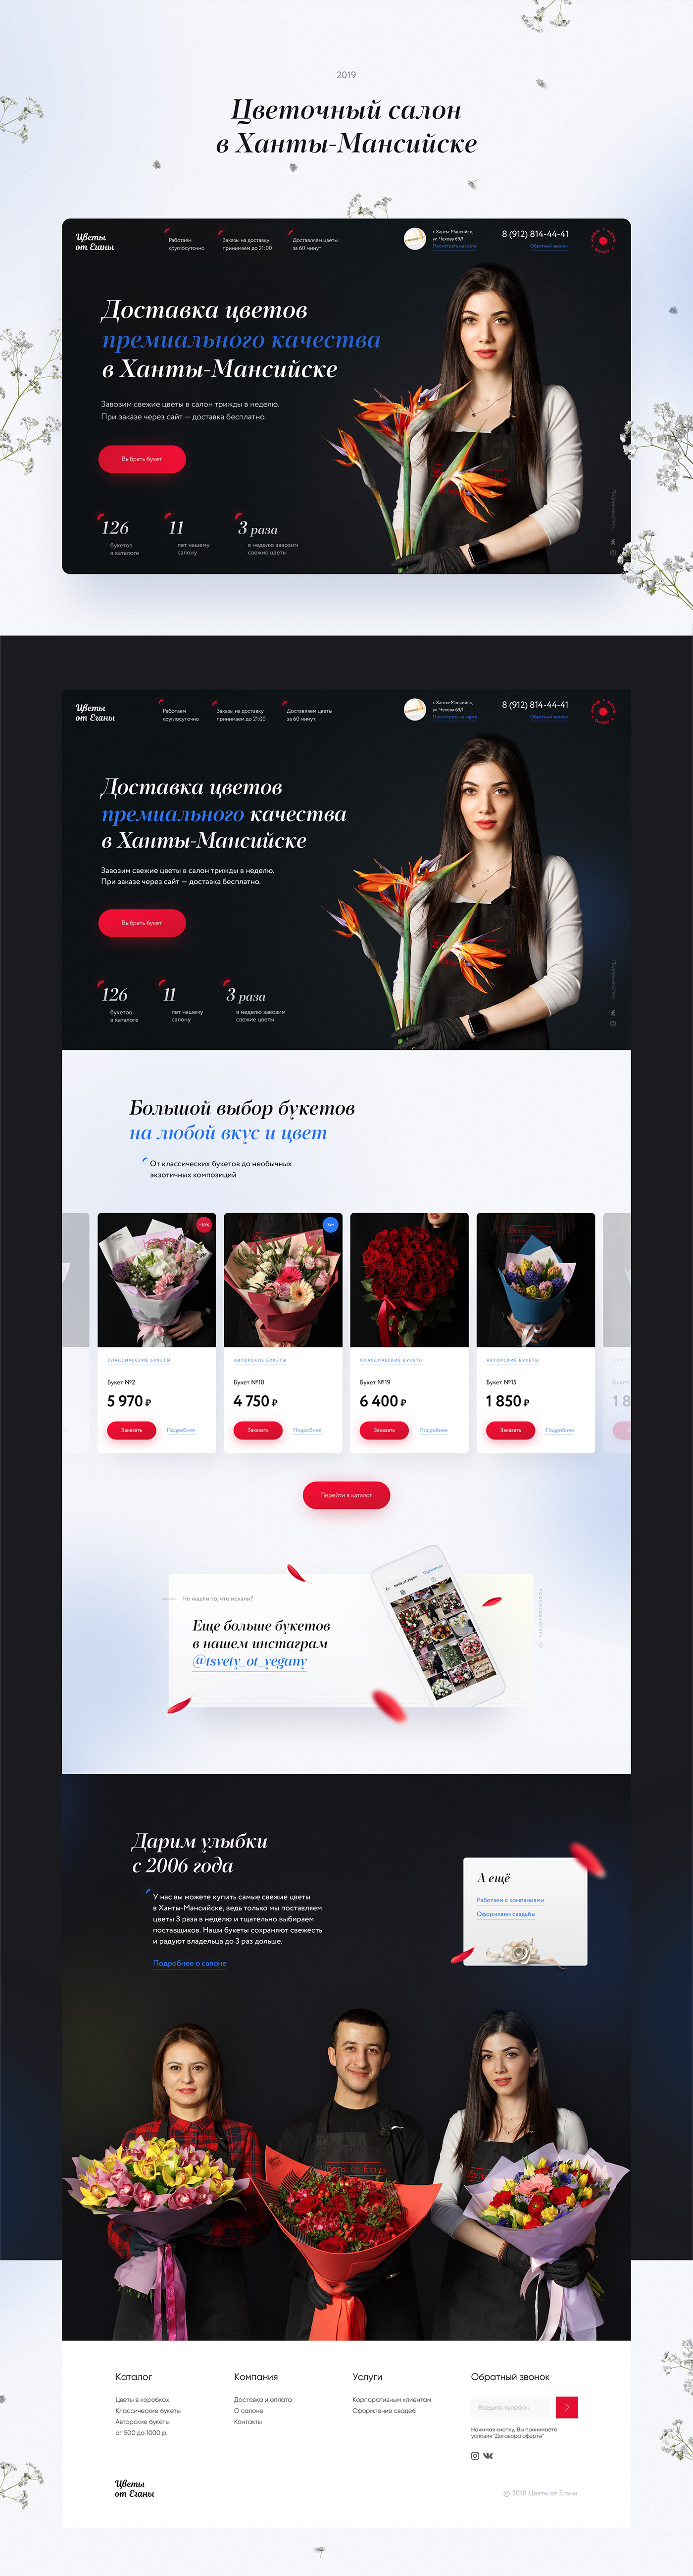 Online flower shop on Behance